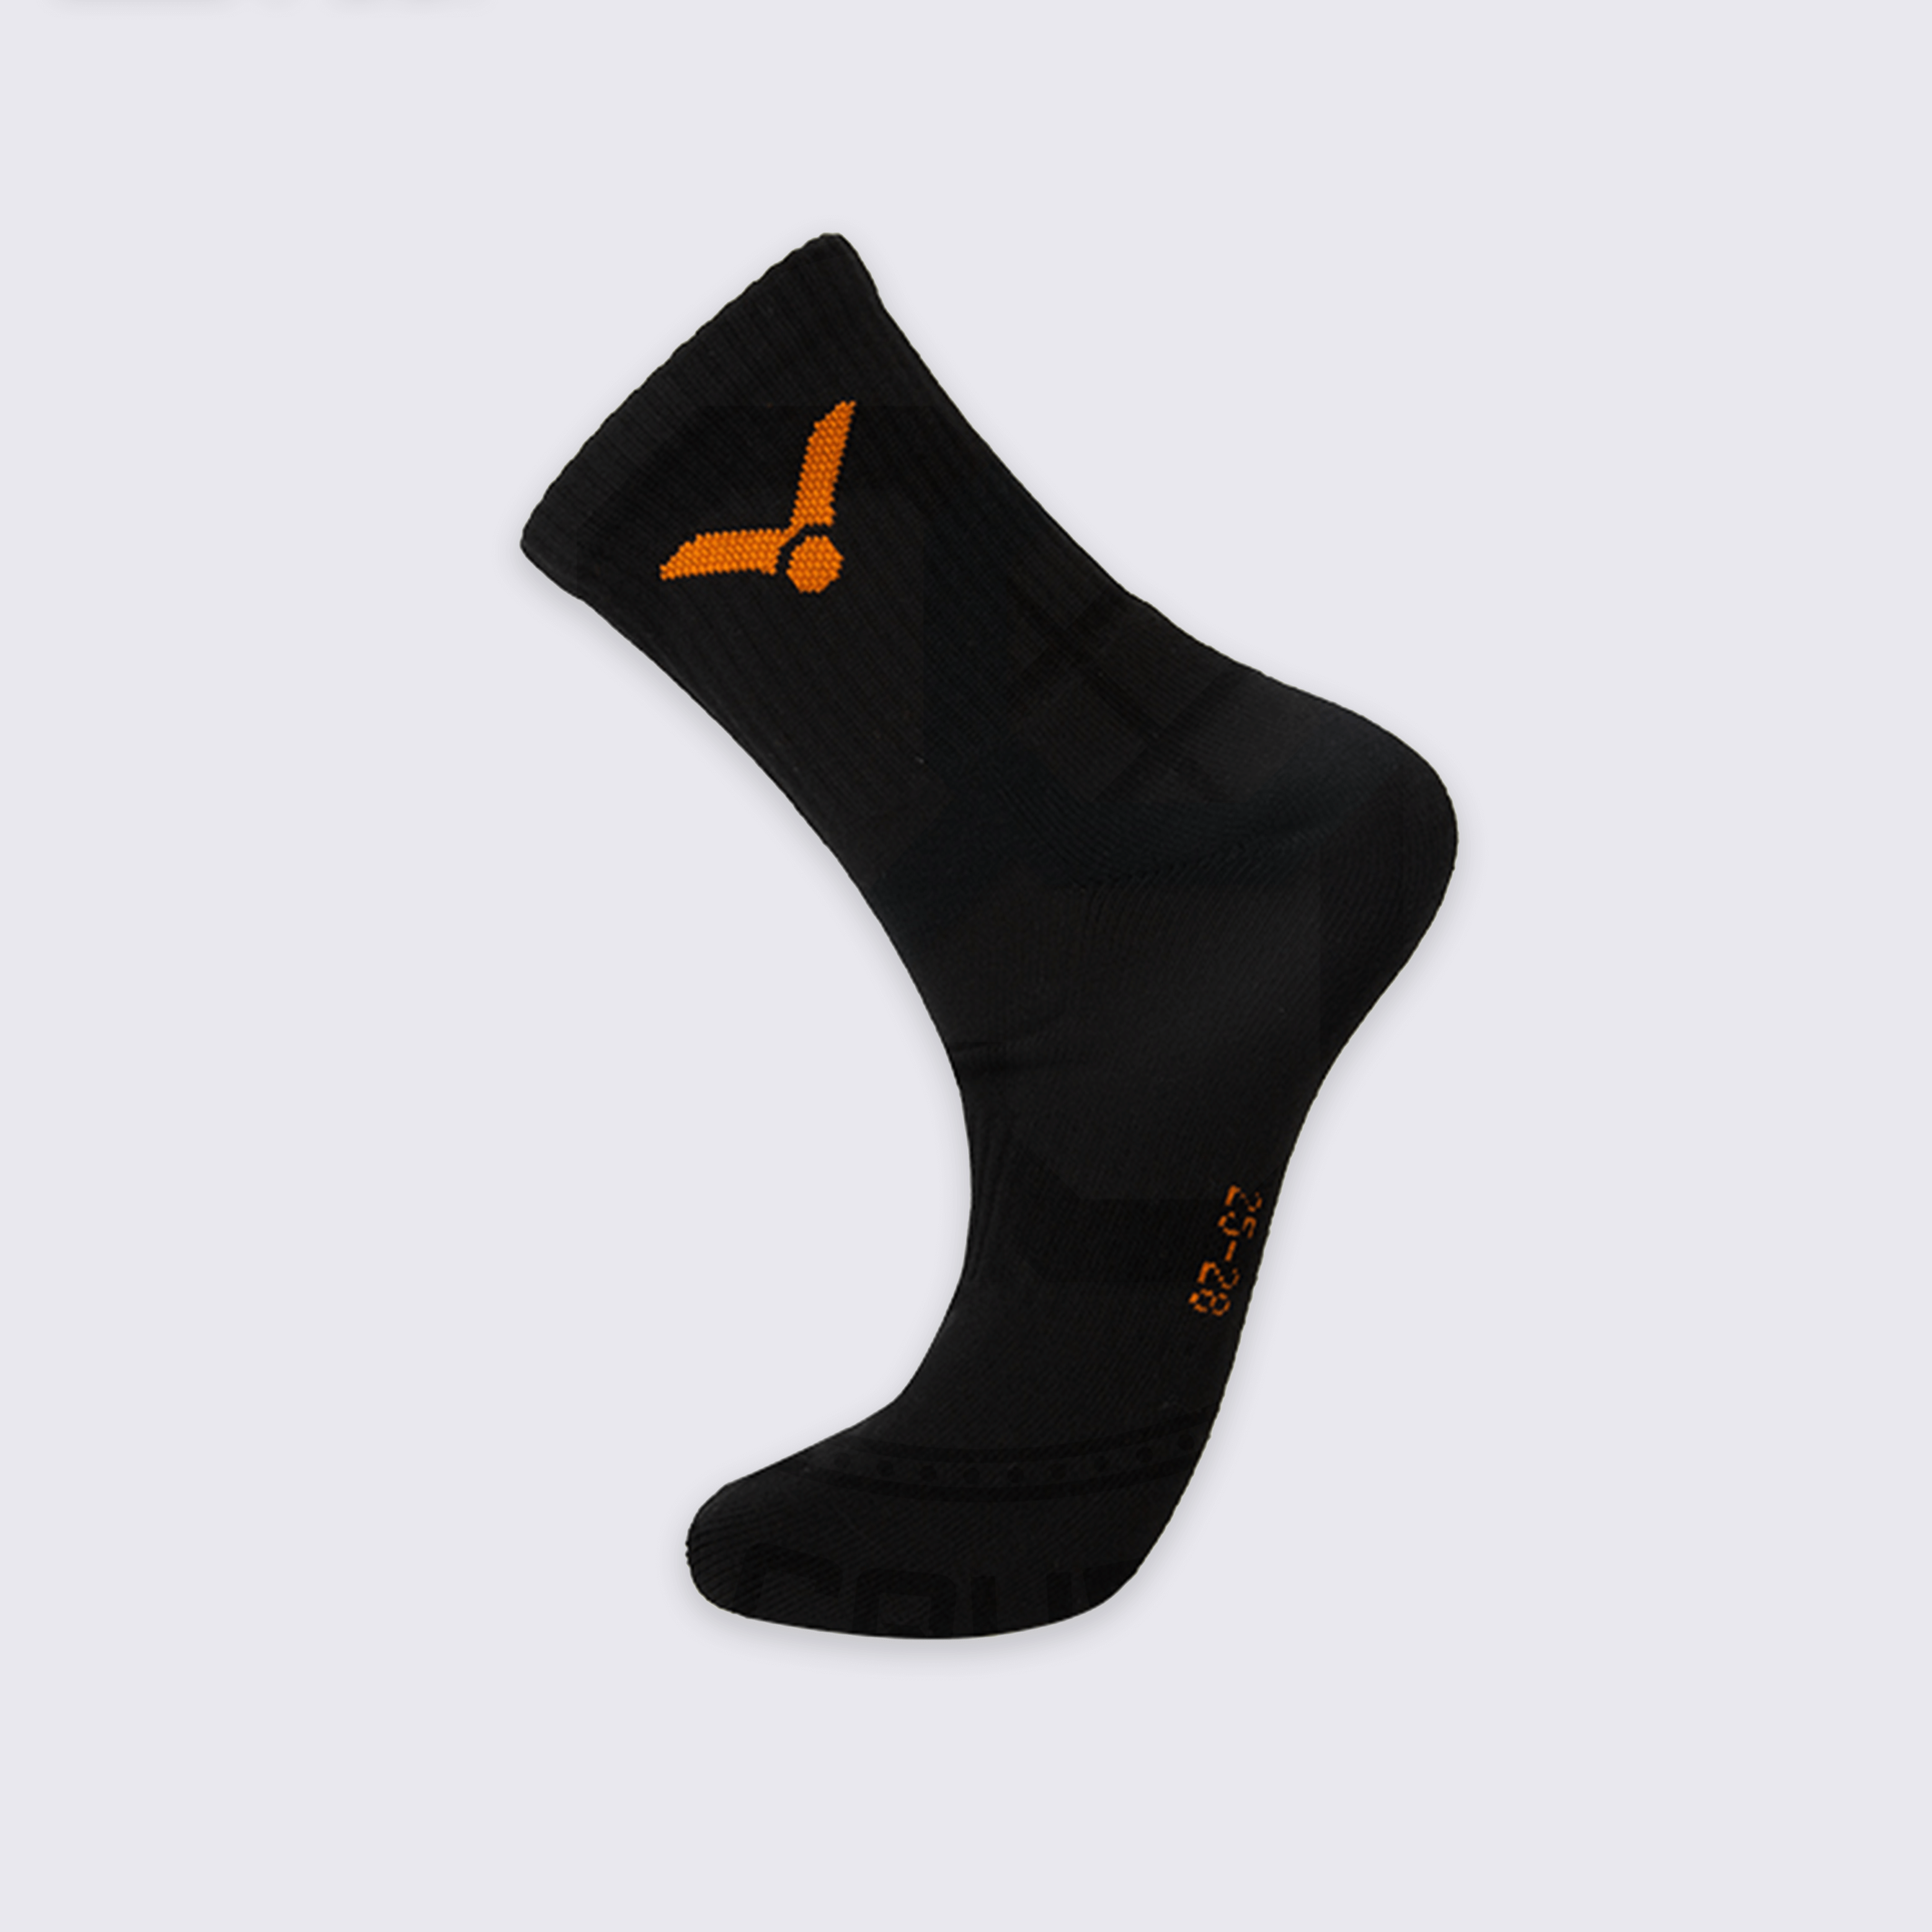 Victor x LZJ Women's Sport Socks SK-LZJ306 C (Black)